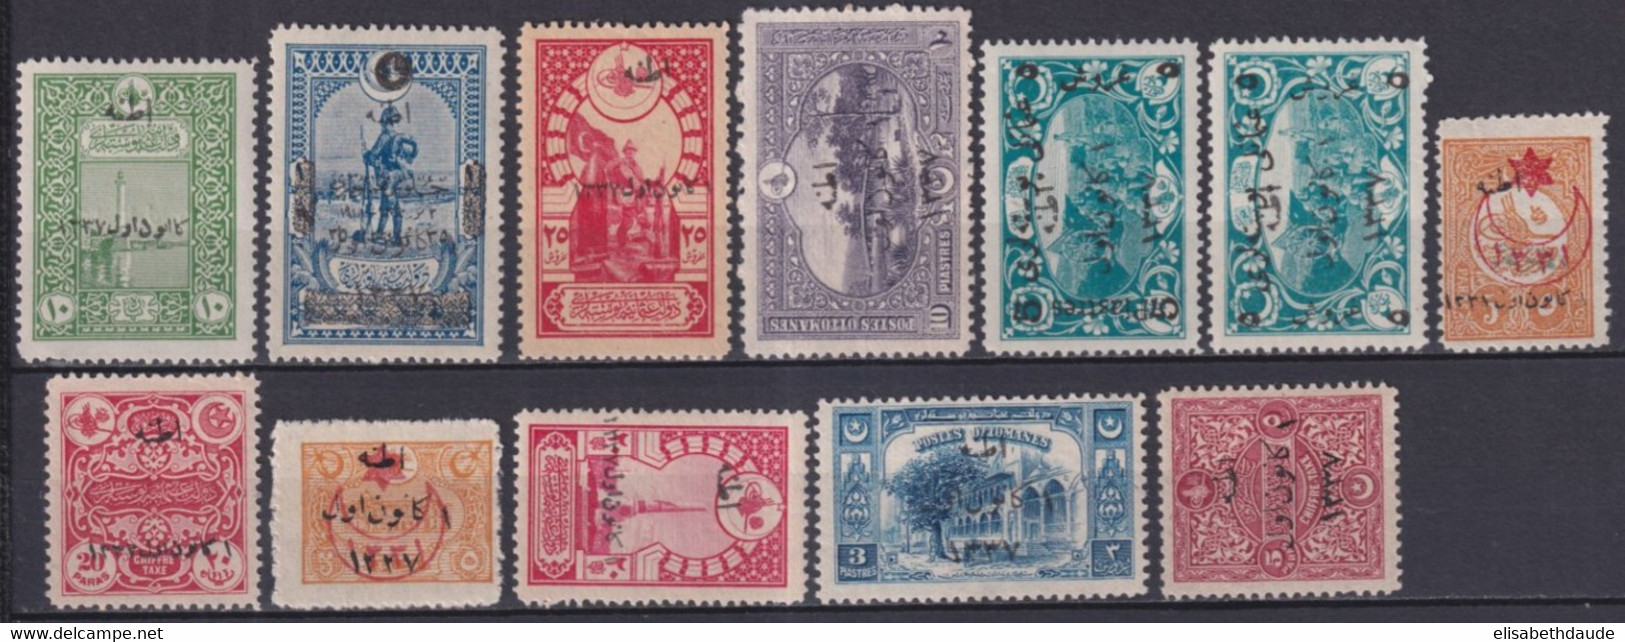 1921 - TURQUIE - RARE EMISSION D'ADANA (CILICIE) - YVERT N° 630/641 (SAUF 642) ** MNH ! COTE = 3255 EUR !! - Unused Stamps